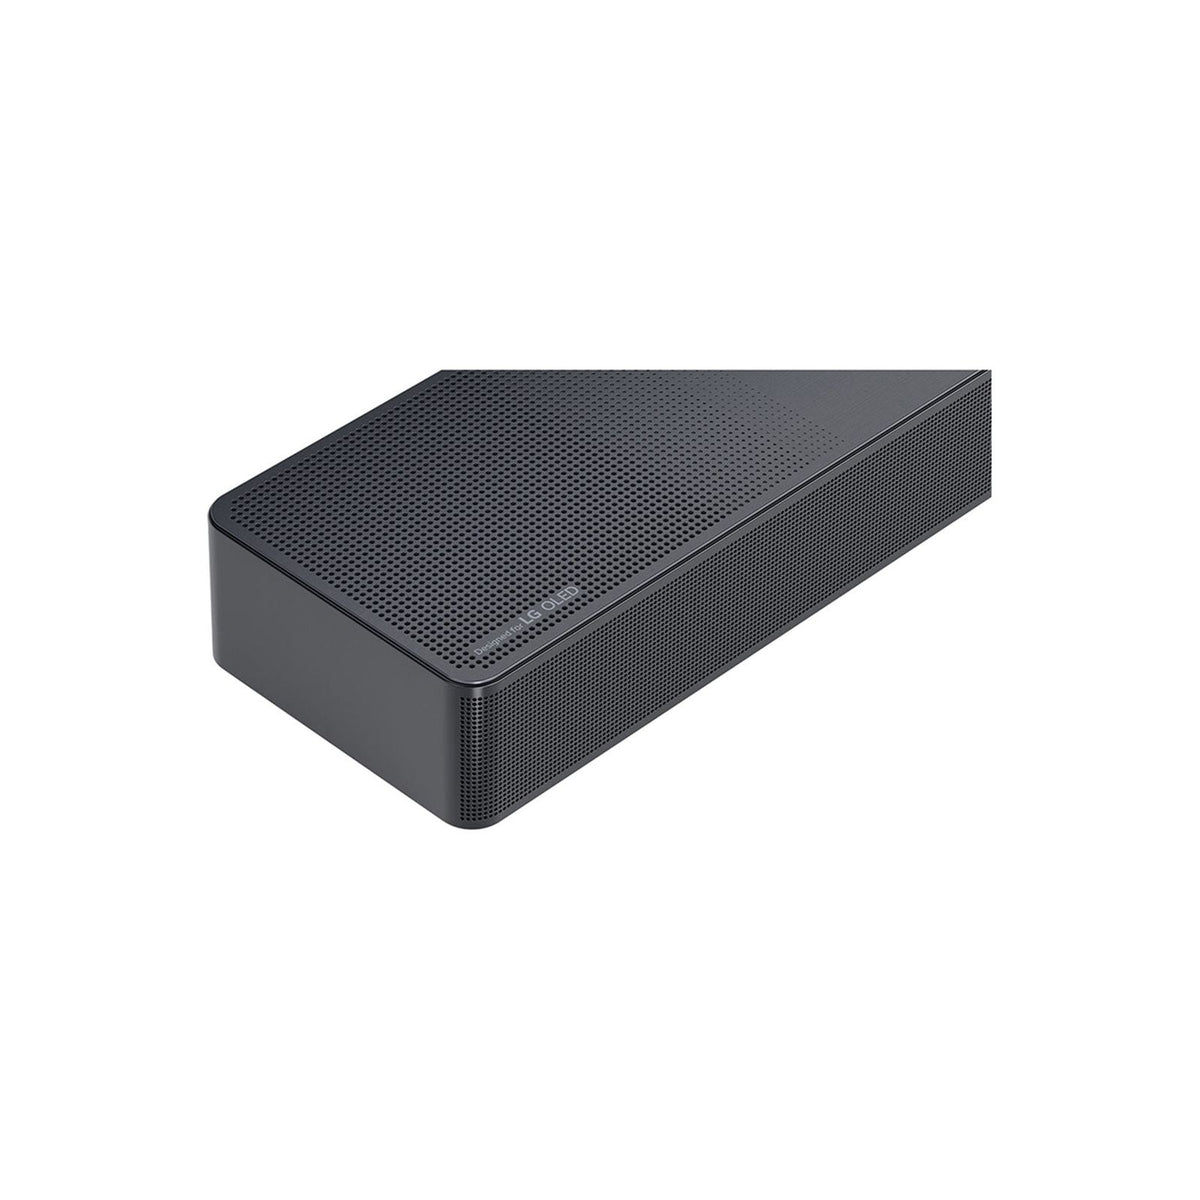 LG 400W 3.1.3ch Bluetooth Soundbar with Wireless Subwoofer - Black | USC9S.DGBRLLK from LG - DID Electrical